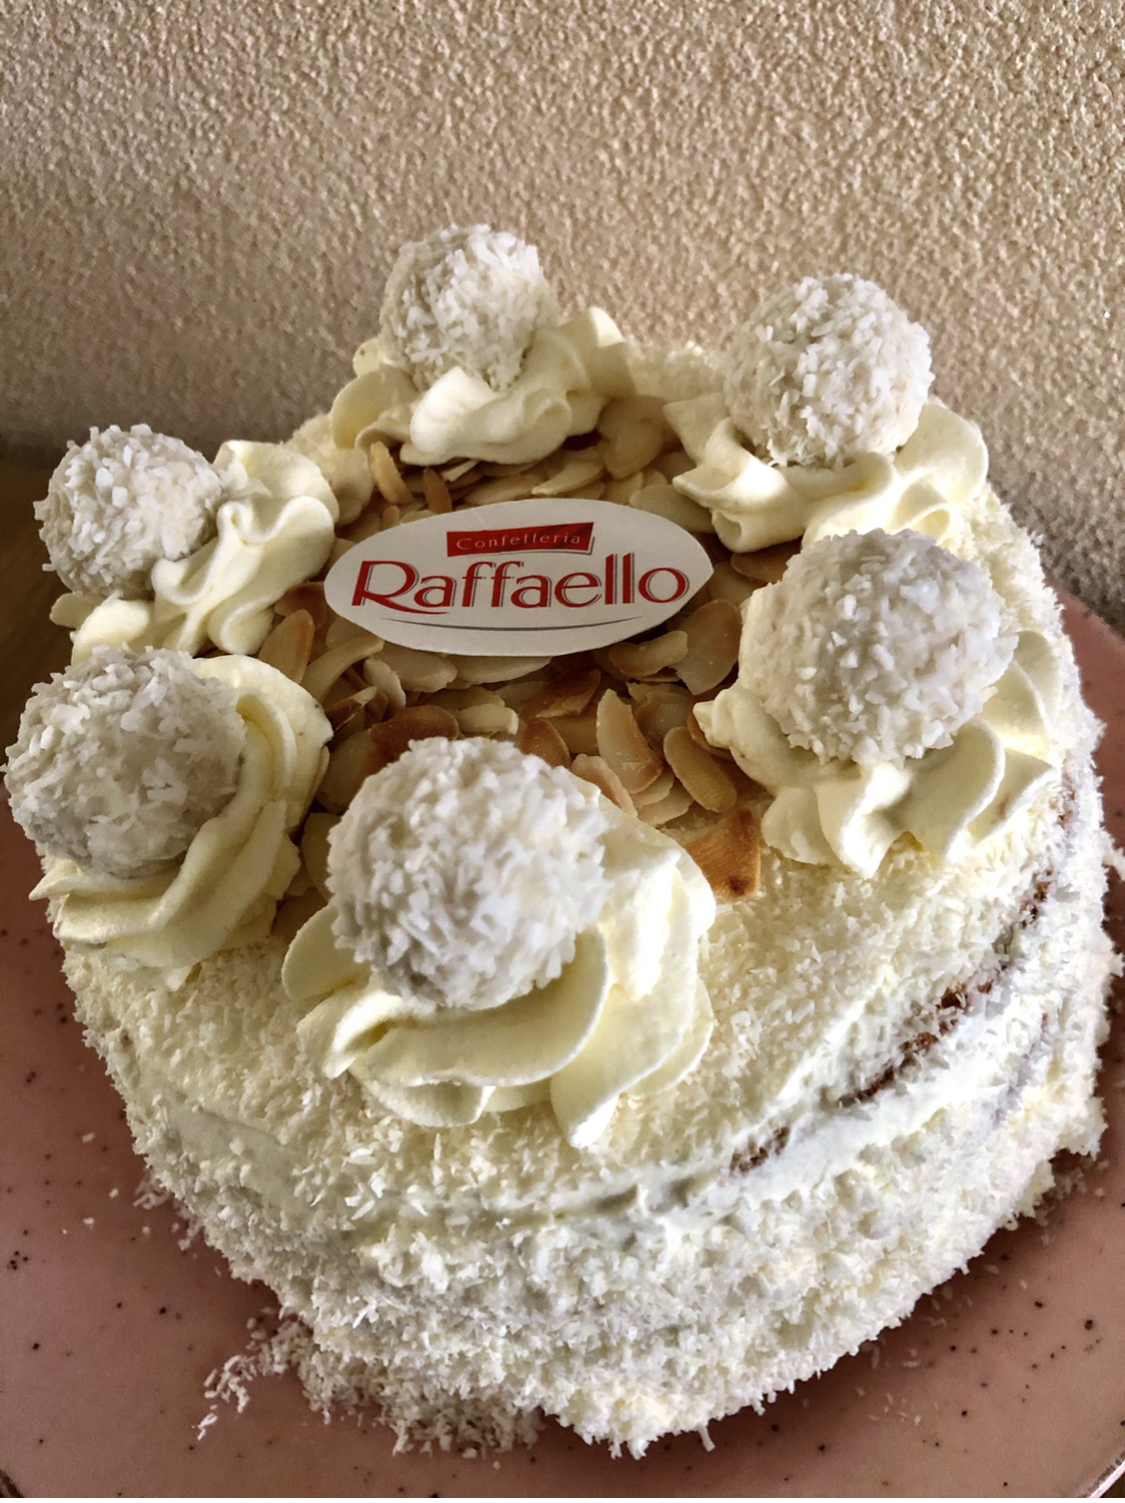 Raffaello Cake Recipe | Episode 428 - Baking with Eda